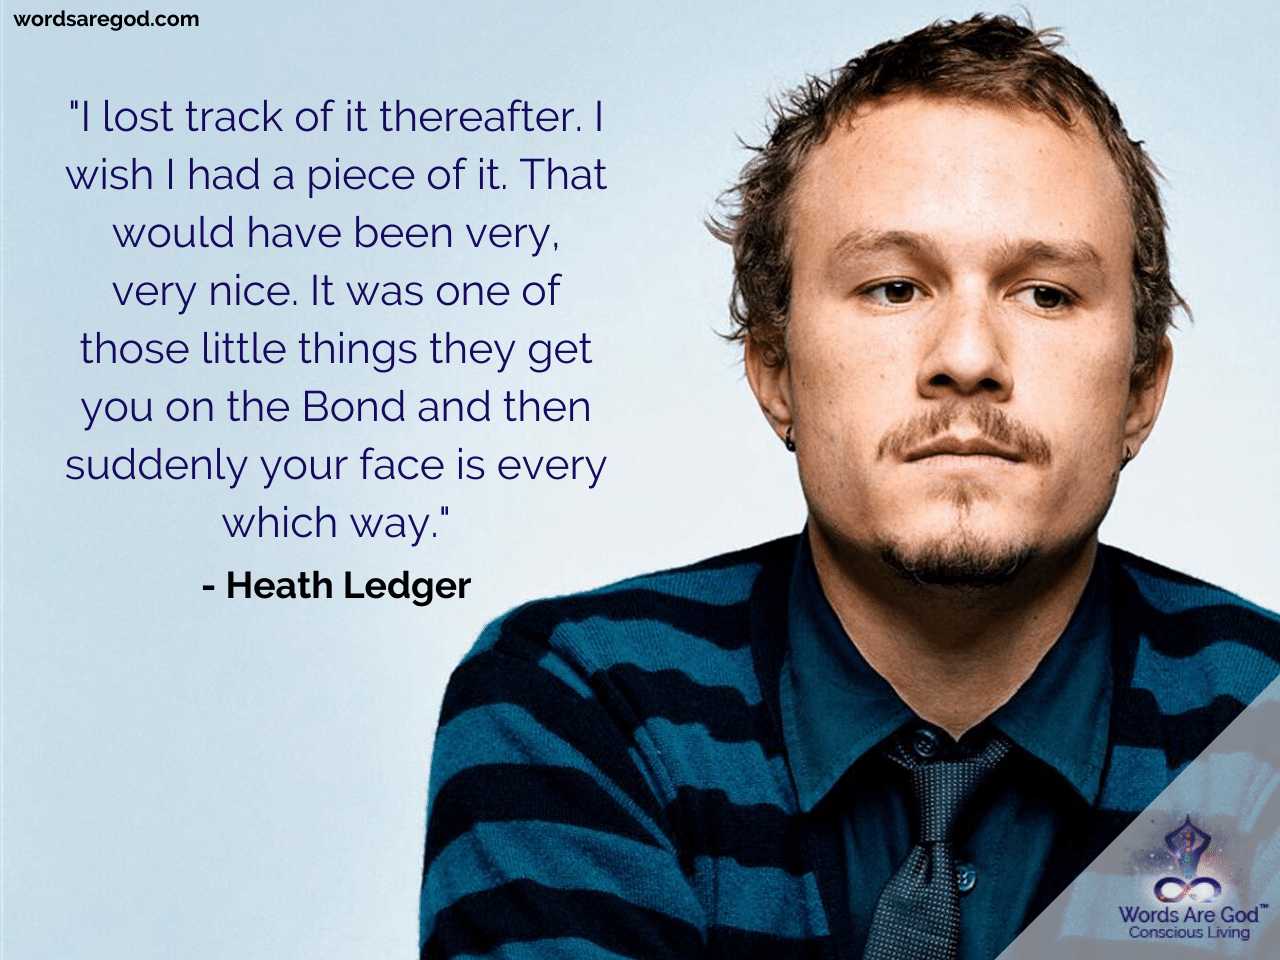 Heath Ledger Best Quotes by Heath Ledger